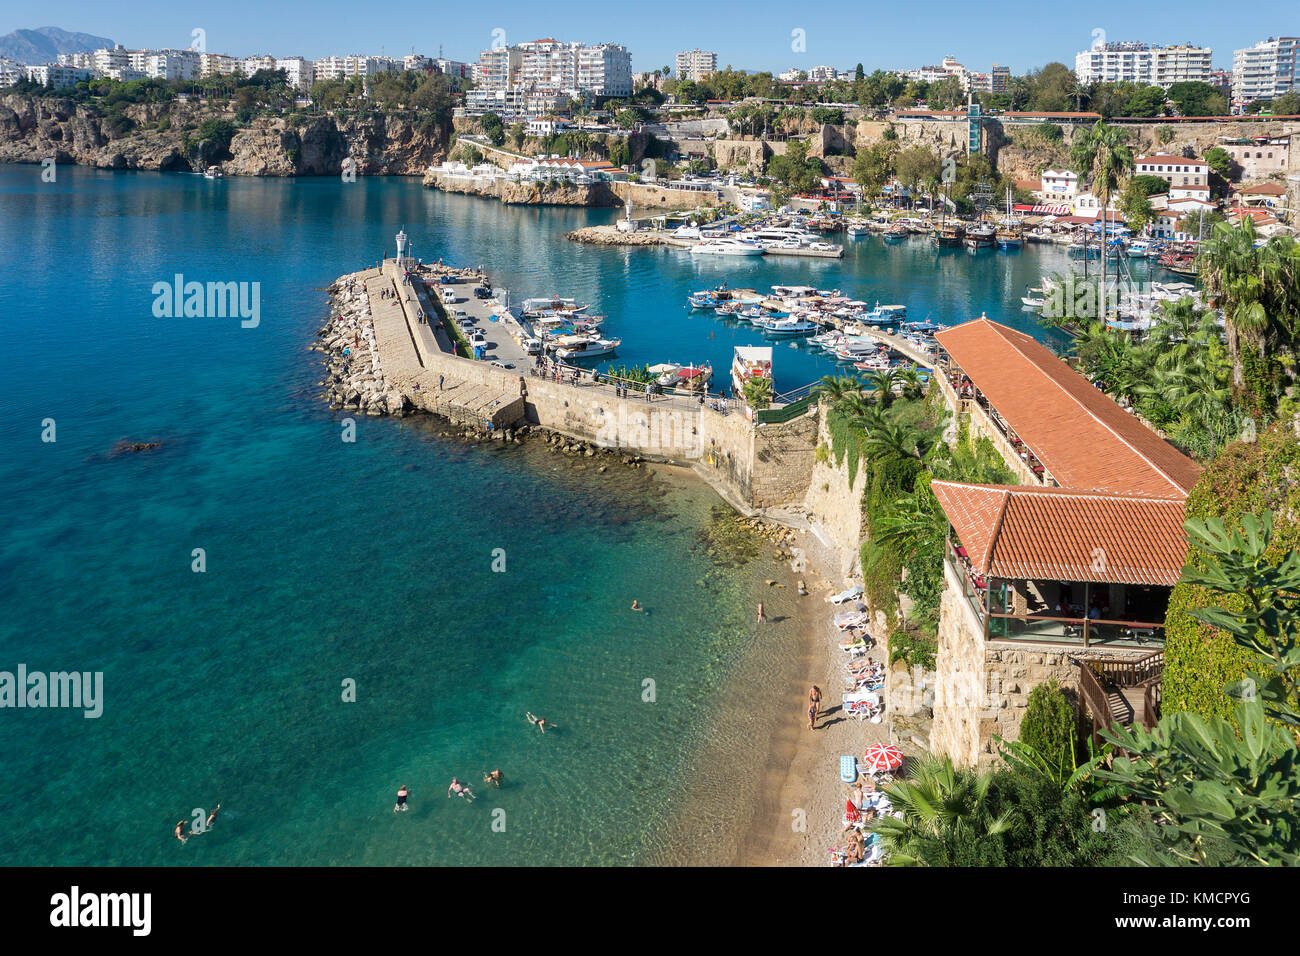 Harbour at the old town Kaleici, UNESCO world heritage site, Antalya, turkish riviera, Turkey Stock Photo